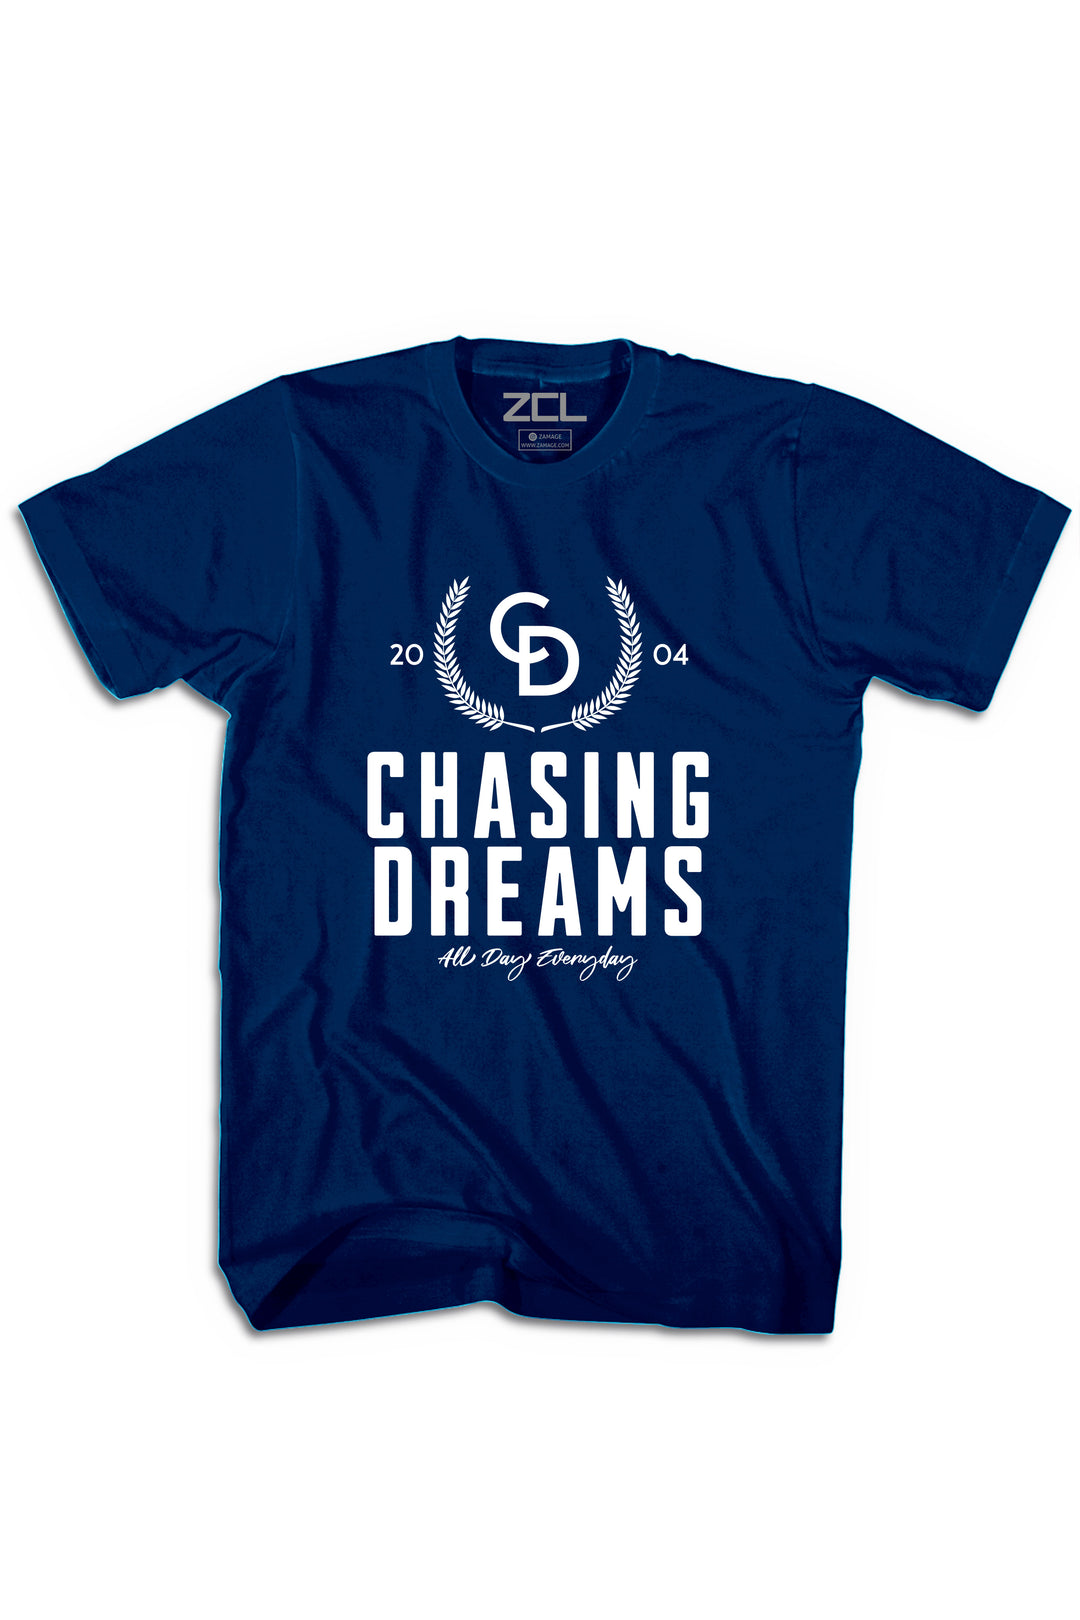 Chasing Dreams Tee (White Logo) - Zamage